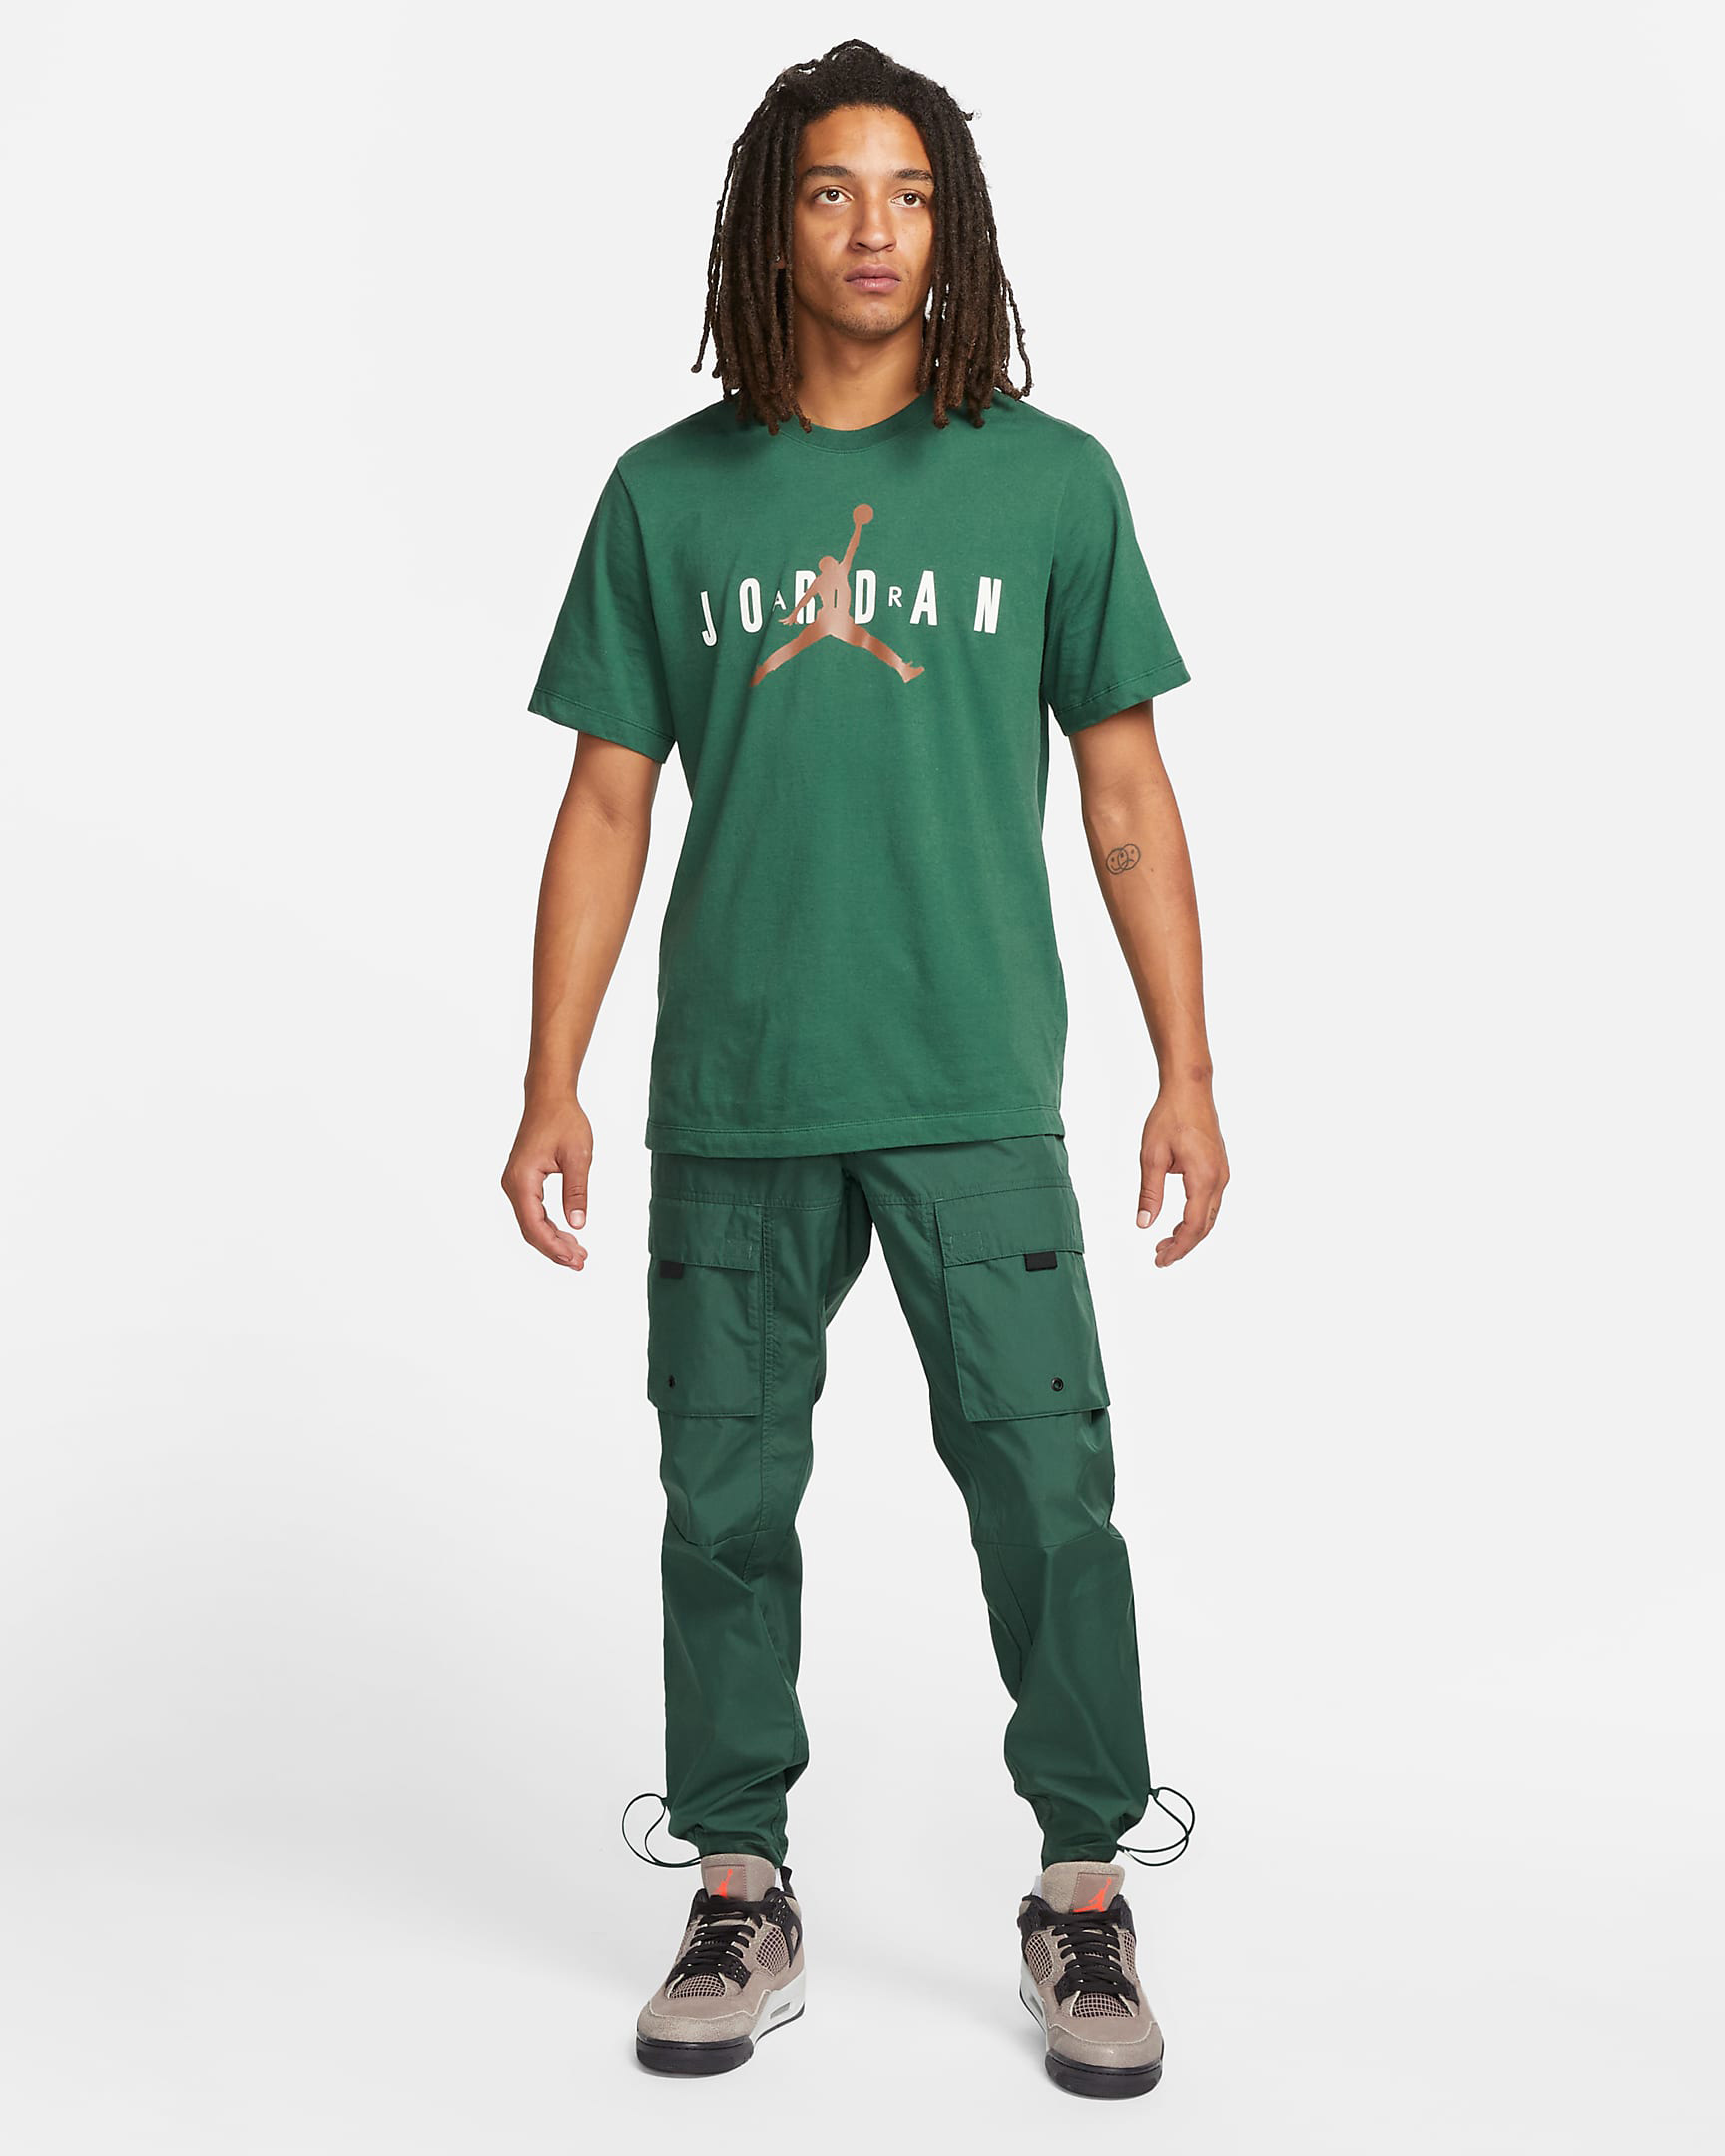 jordan-noble-green-t-shirt-pants-outfit